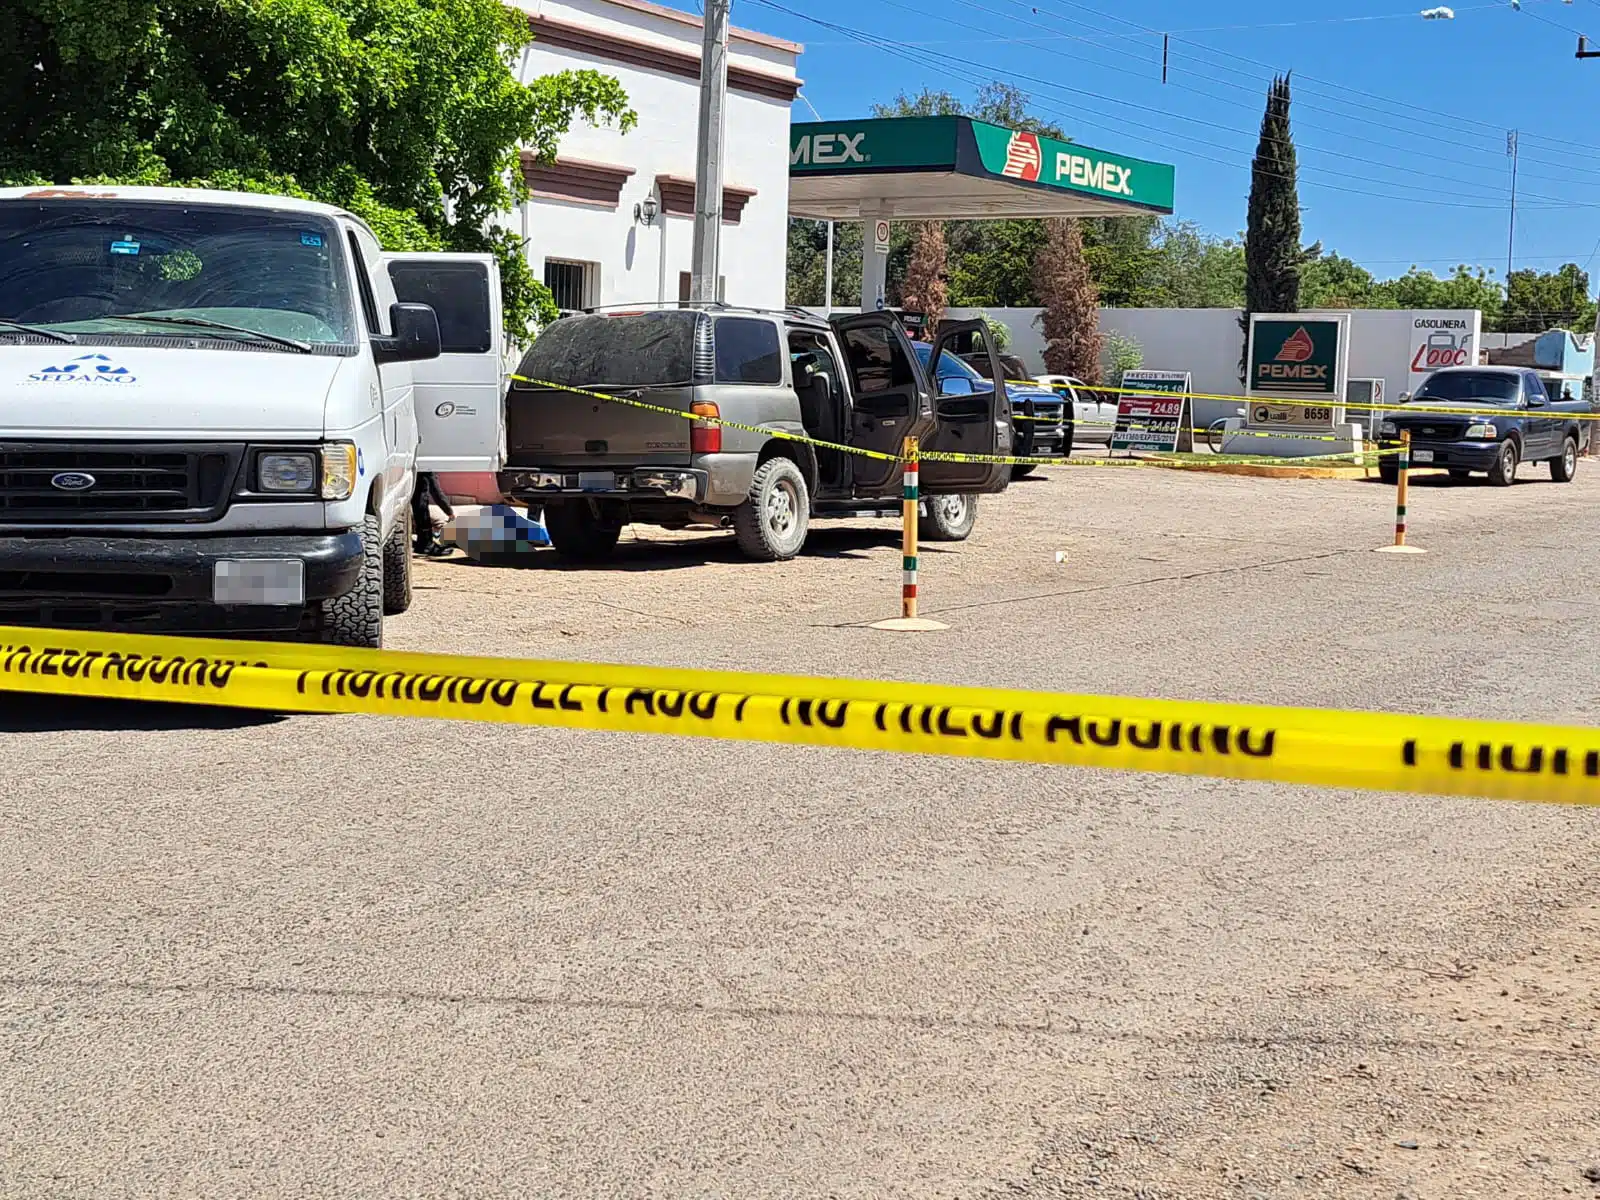 Vagoneta de la funeraria local que recogió el cuerpo de Fany Patricia en Ocoroni municipio de Sinaloa